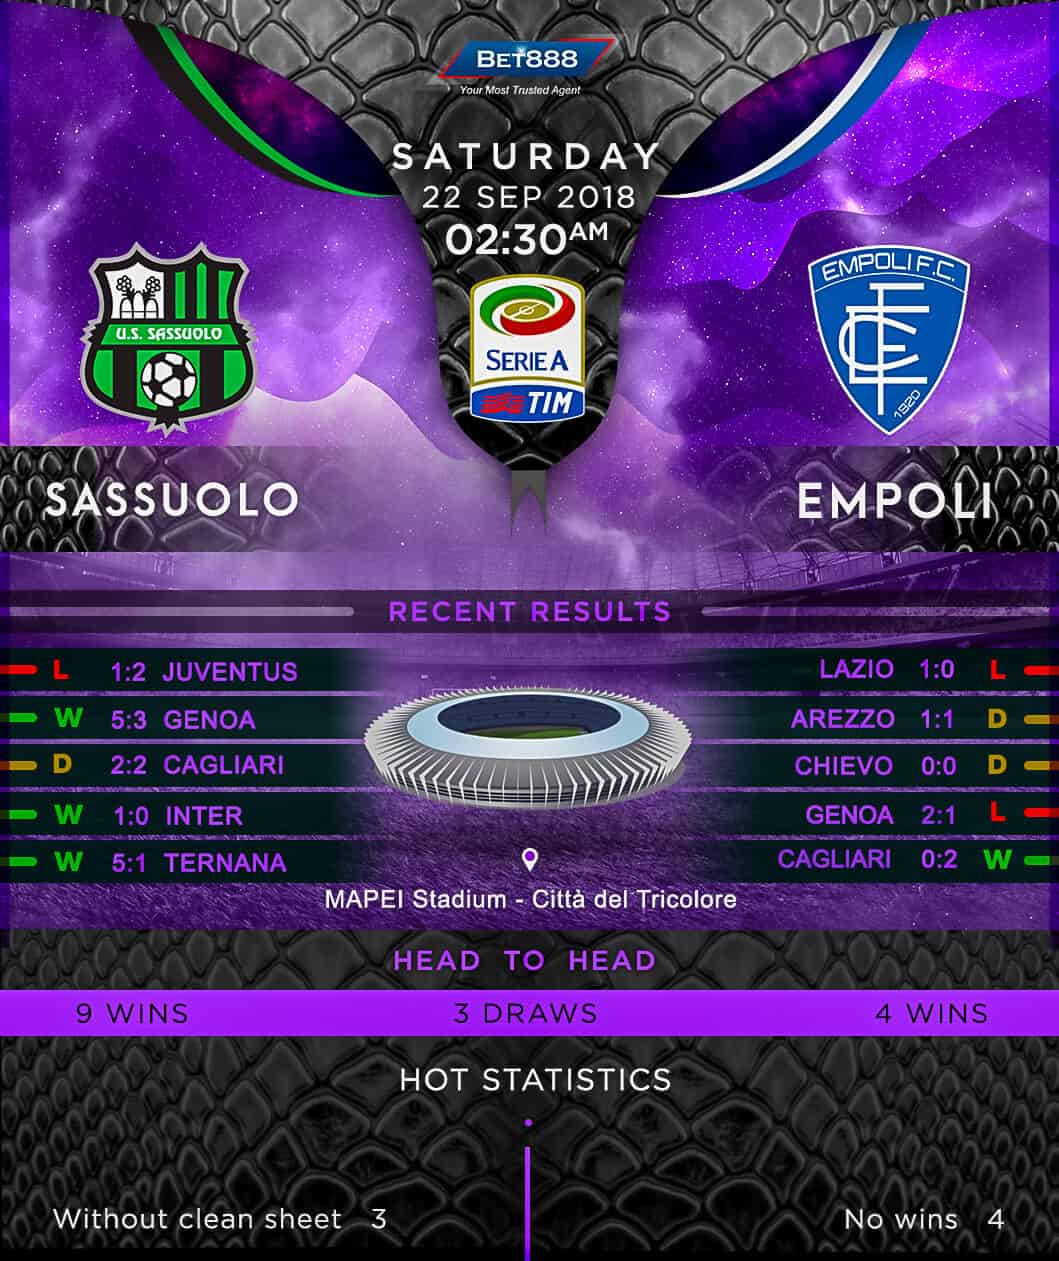 Sassuolo vs Empoli 22/09/18